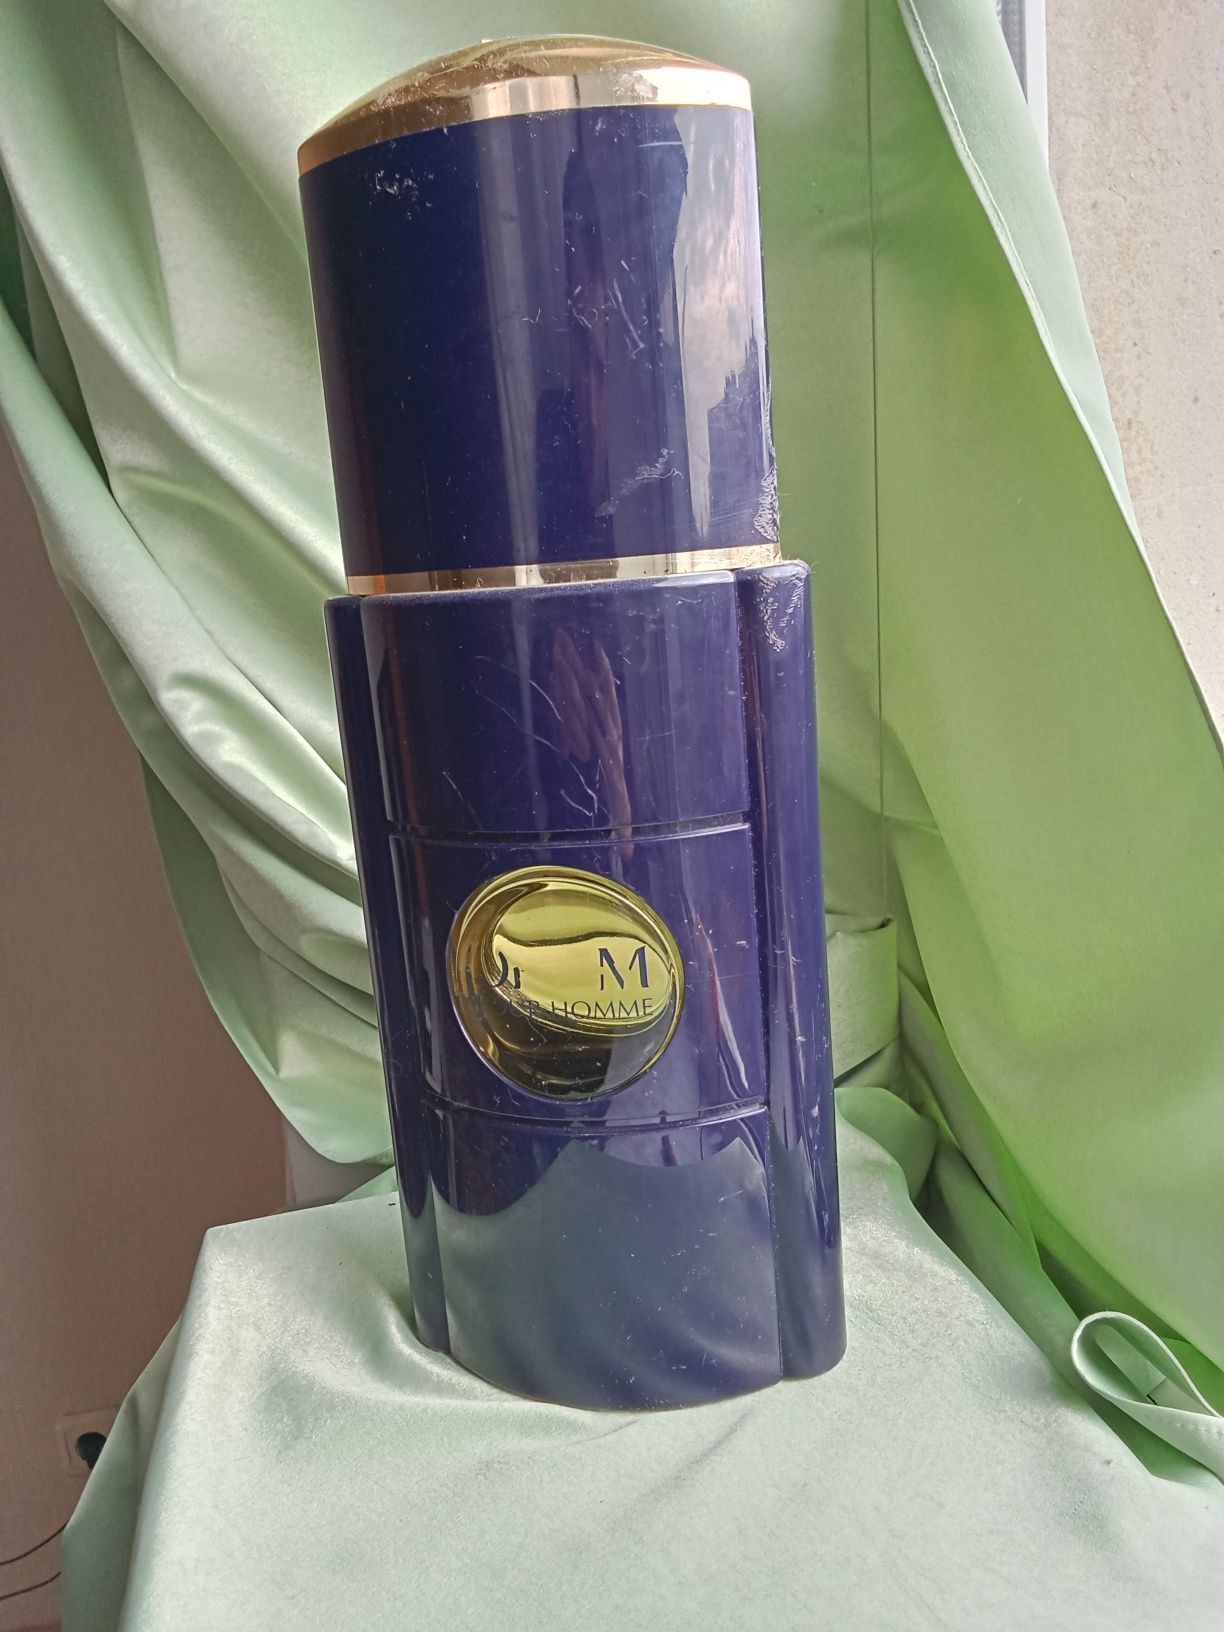 Рекламный флакон духов Yves Sant Laurent opium (2 кг) factice 1995год.